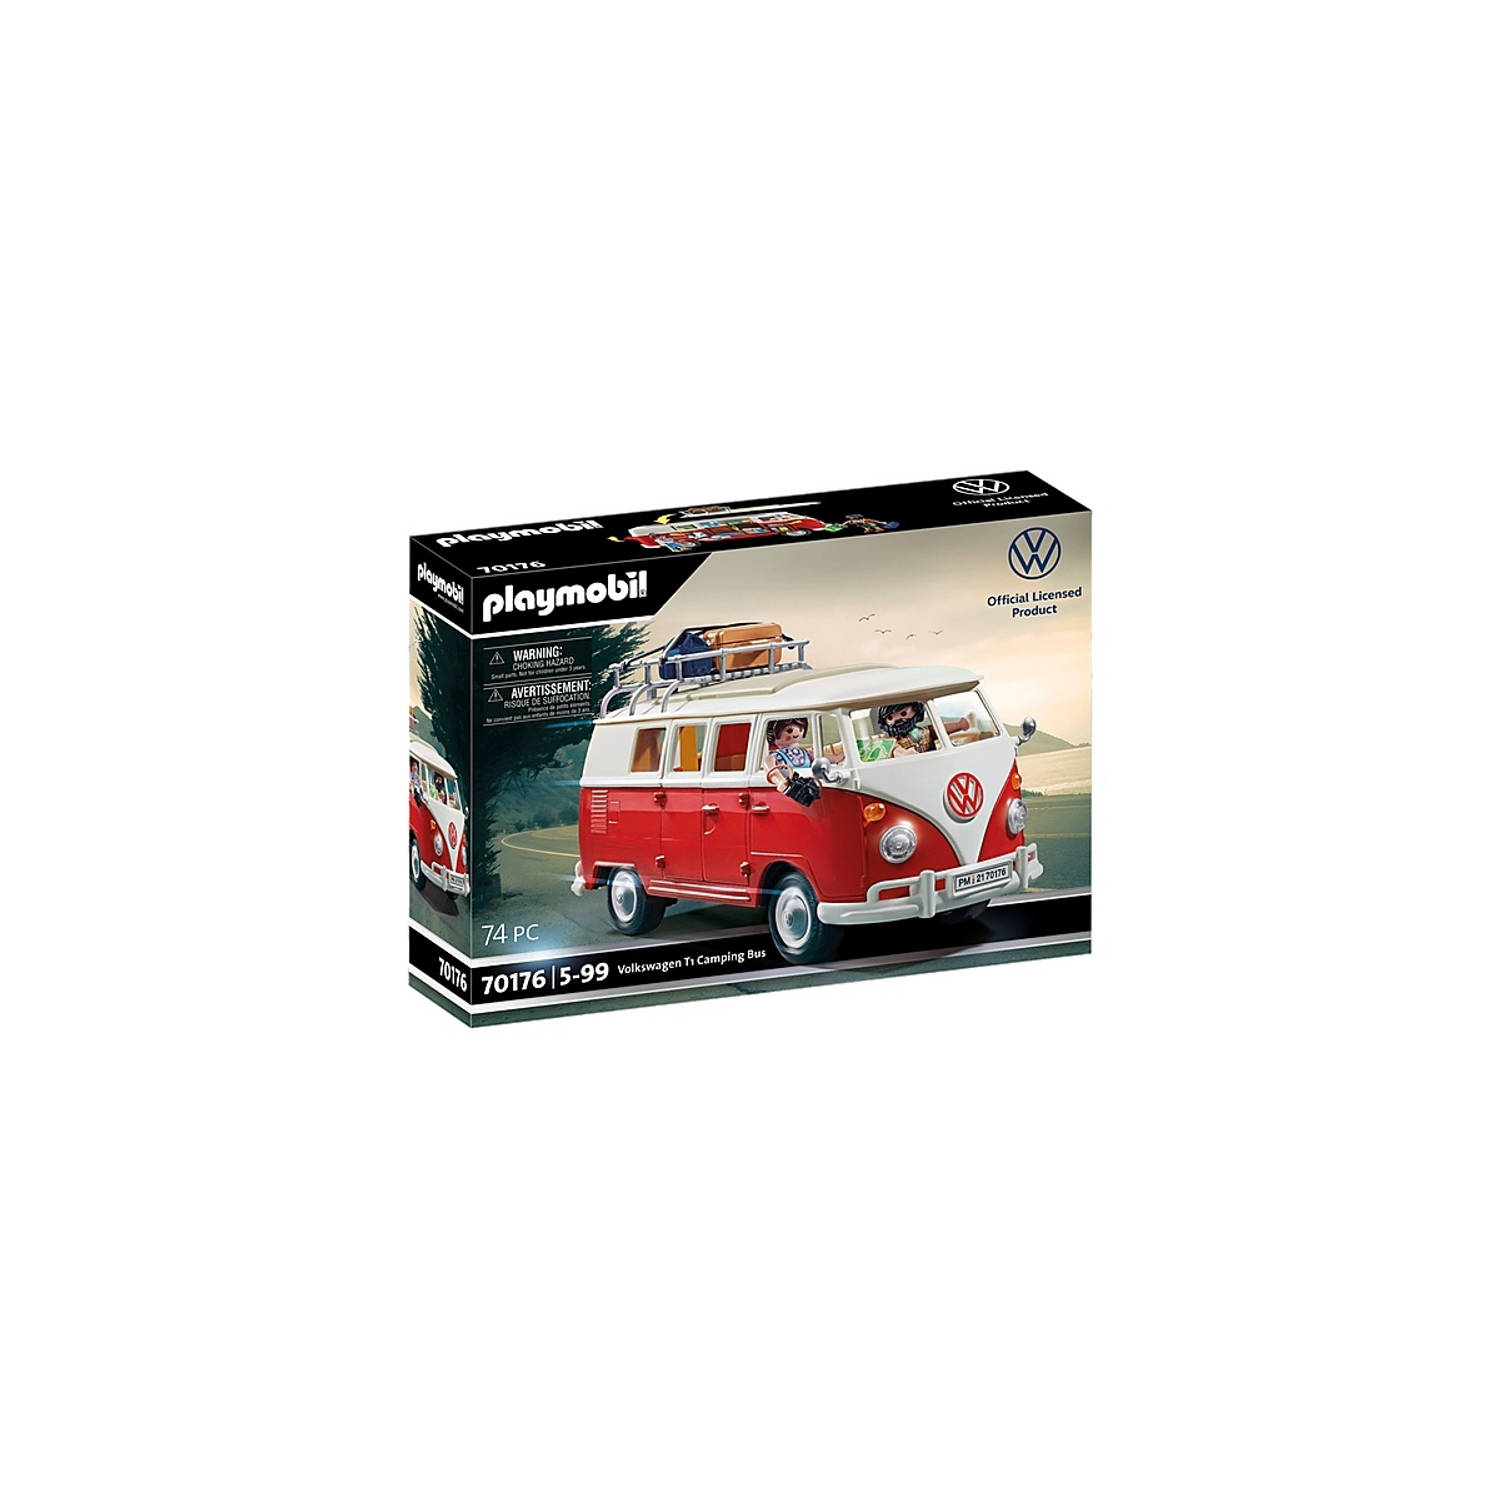 Playmobil official licensed product 70176 Volkswagen T1 Cmaperbus